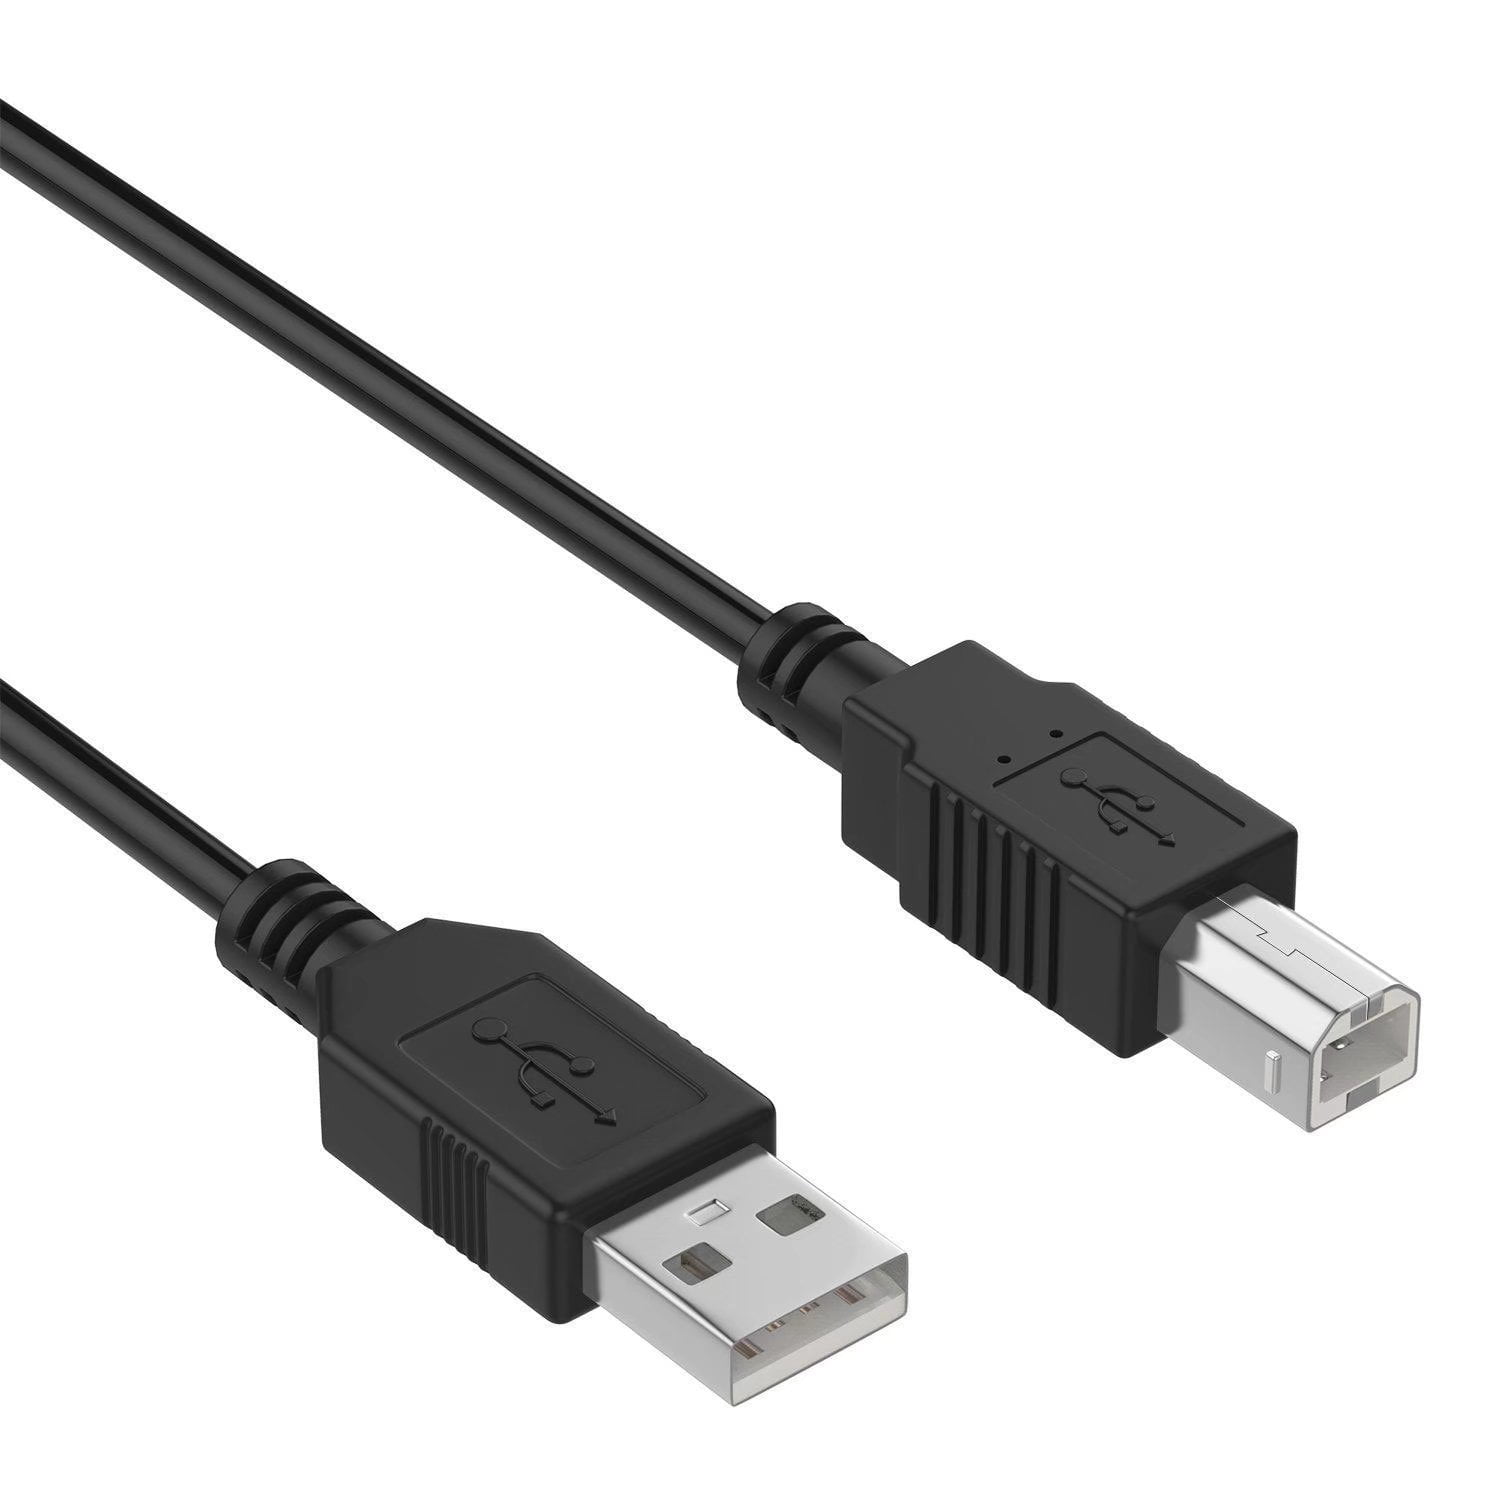 USB PC Cable Cord for Canon Printer MP950 MP960 MP970 MP980 MP990 MG3222 MG3620 